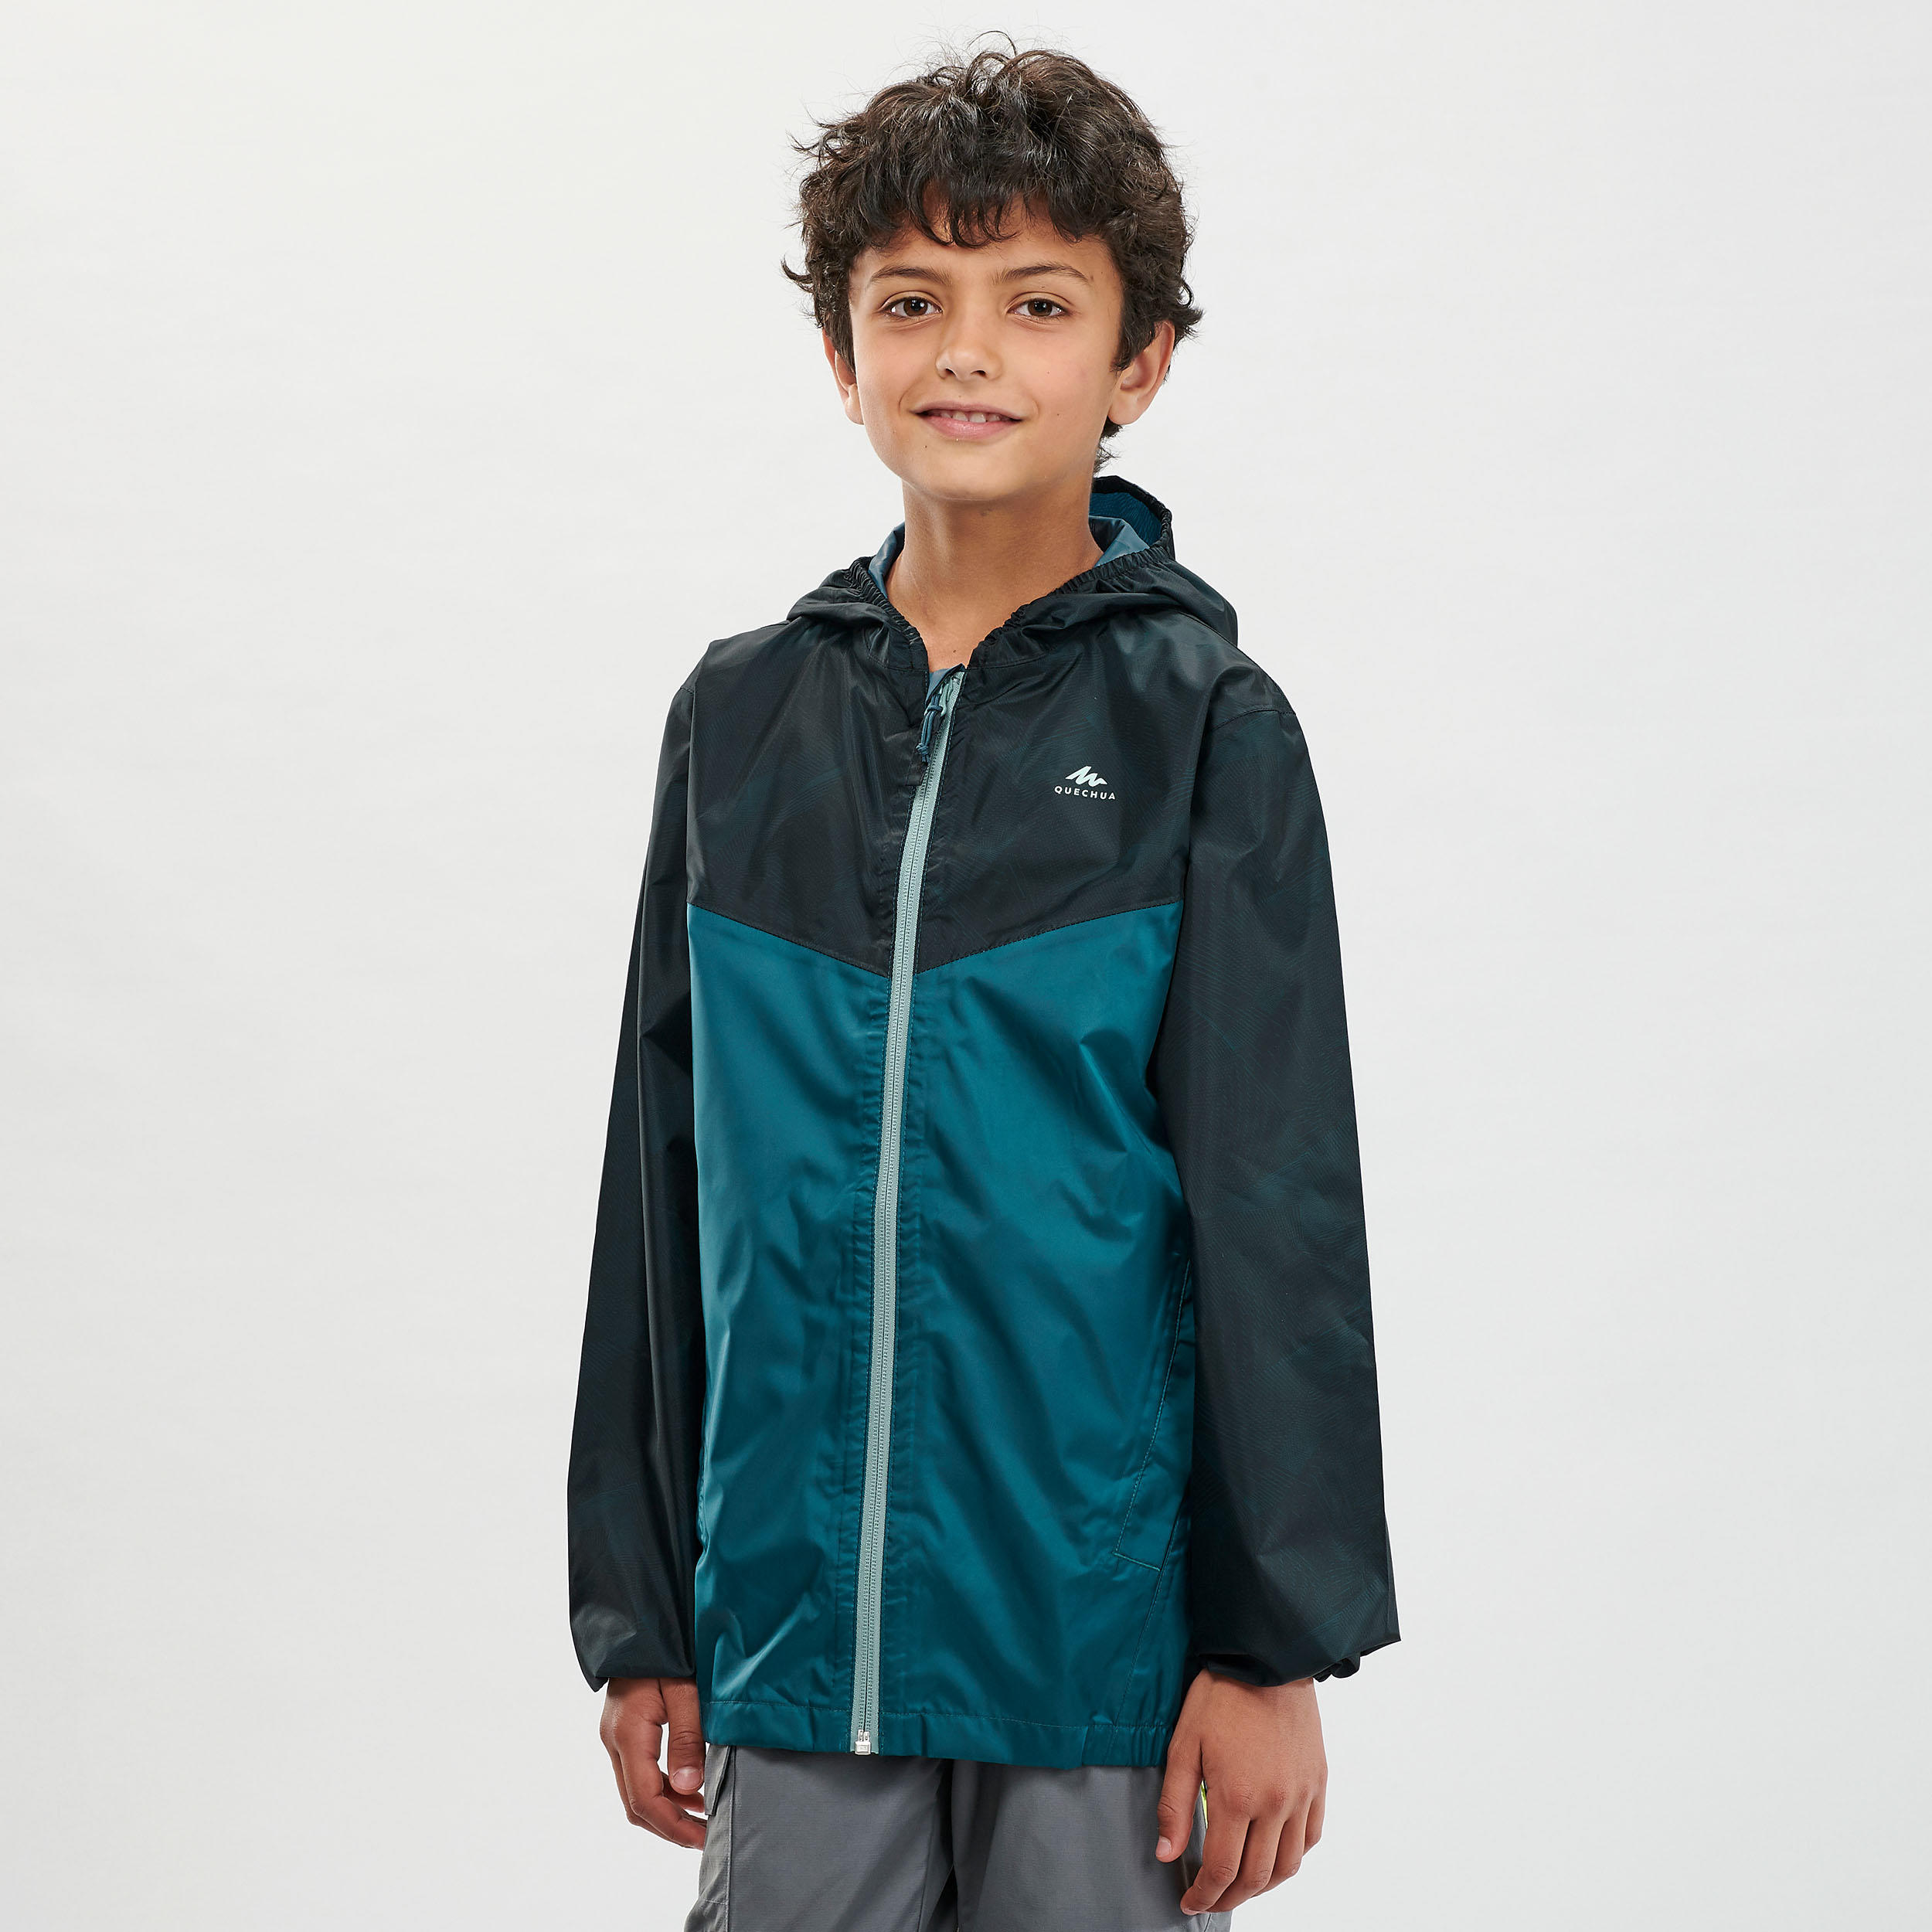 decathlon childrens waterproof jacket